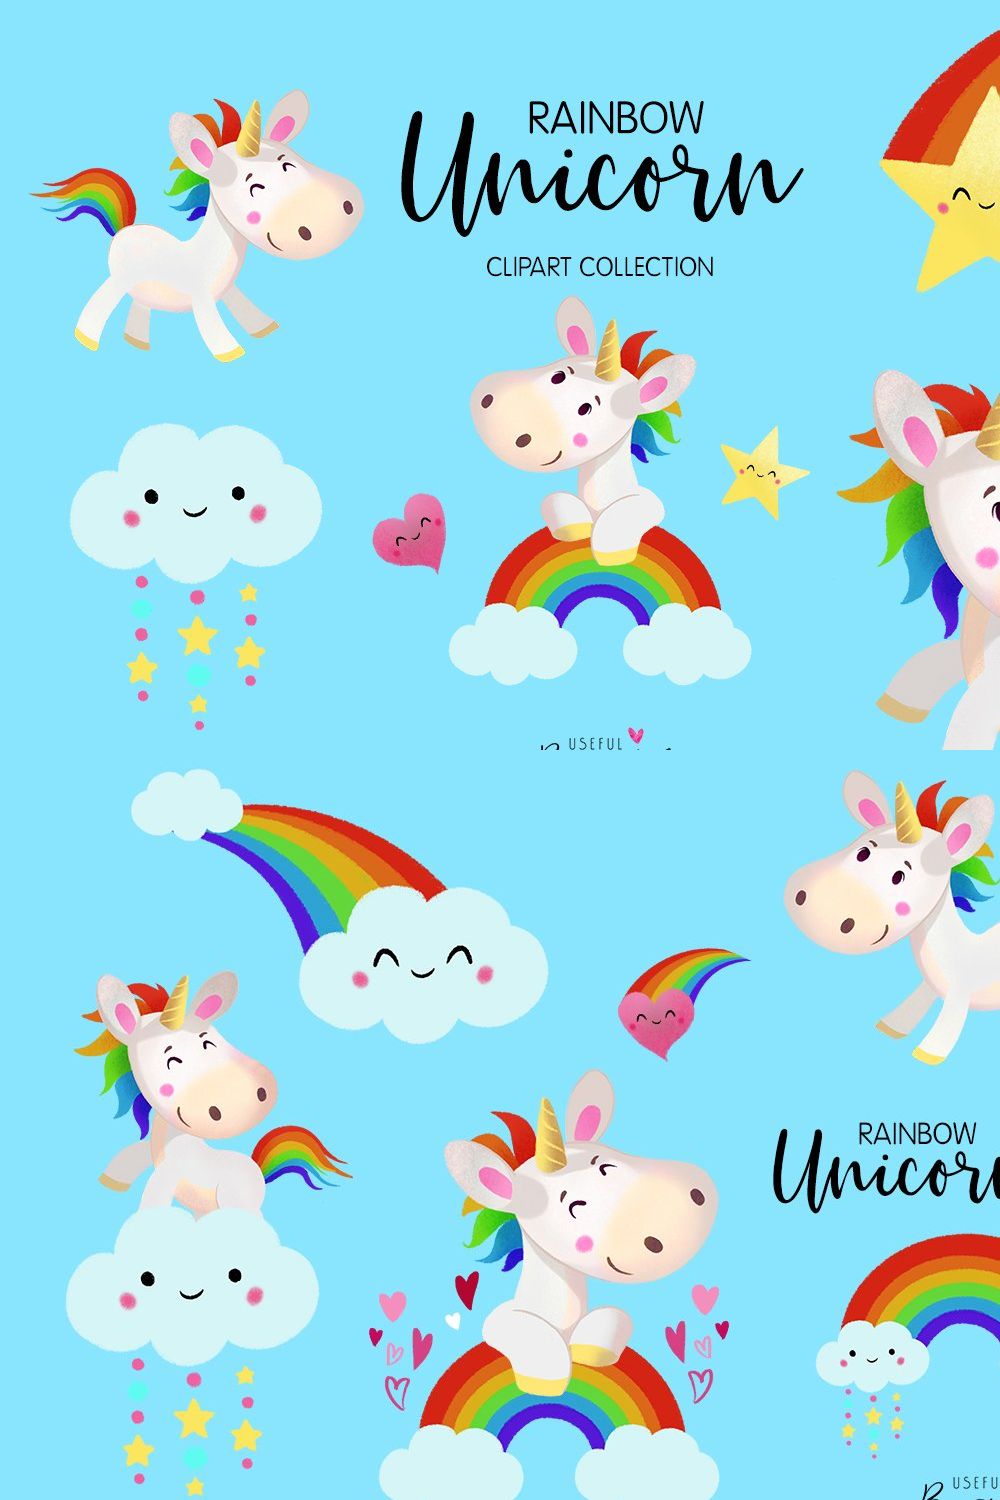 Rainbow Unicorn pinterest preview image.